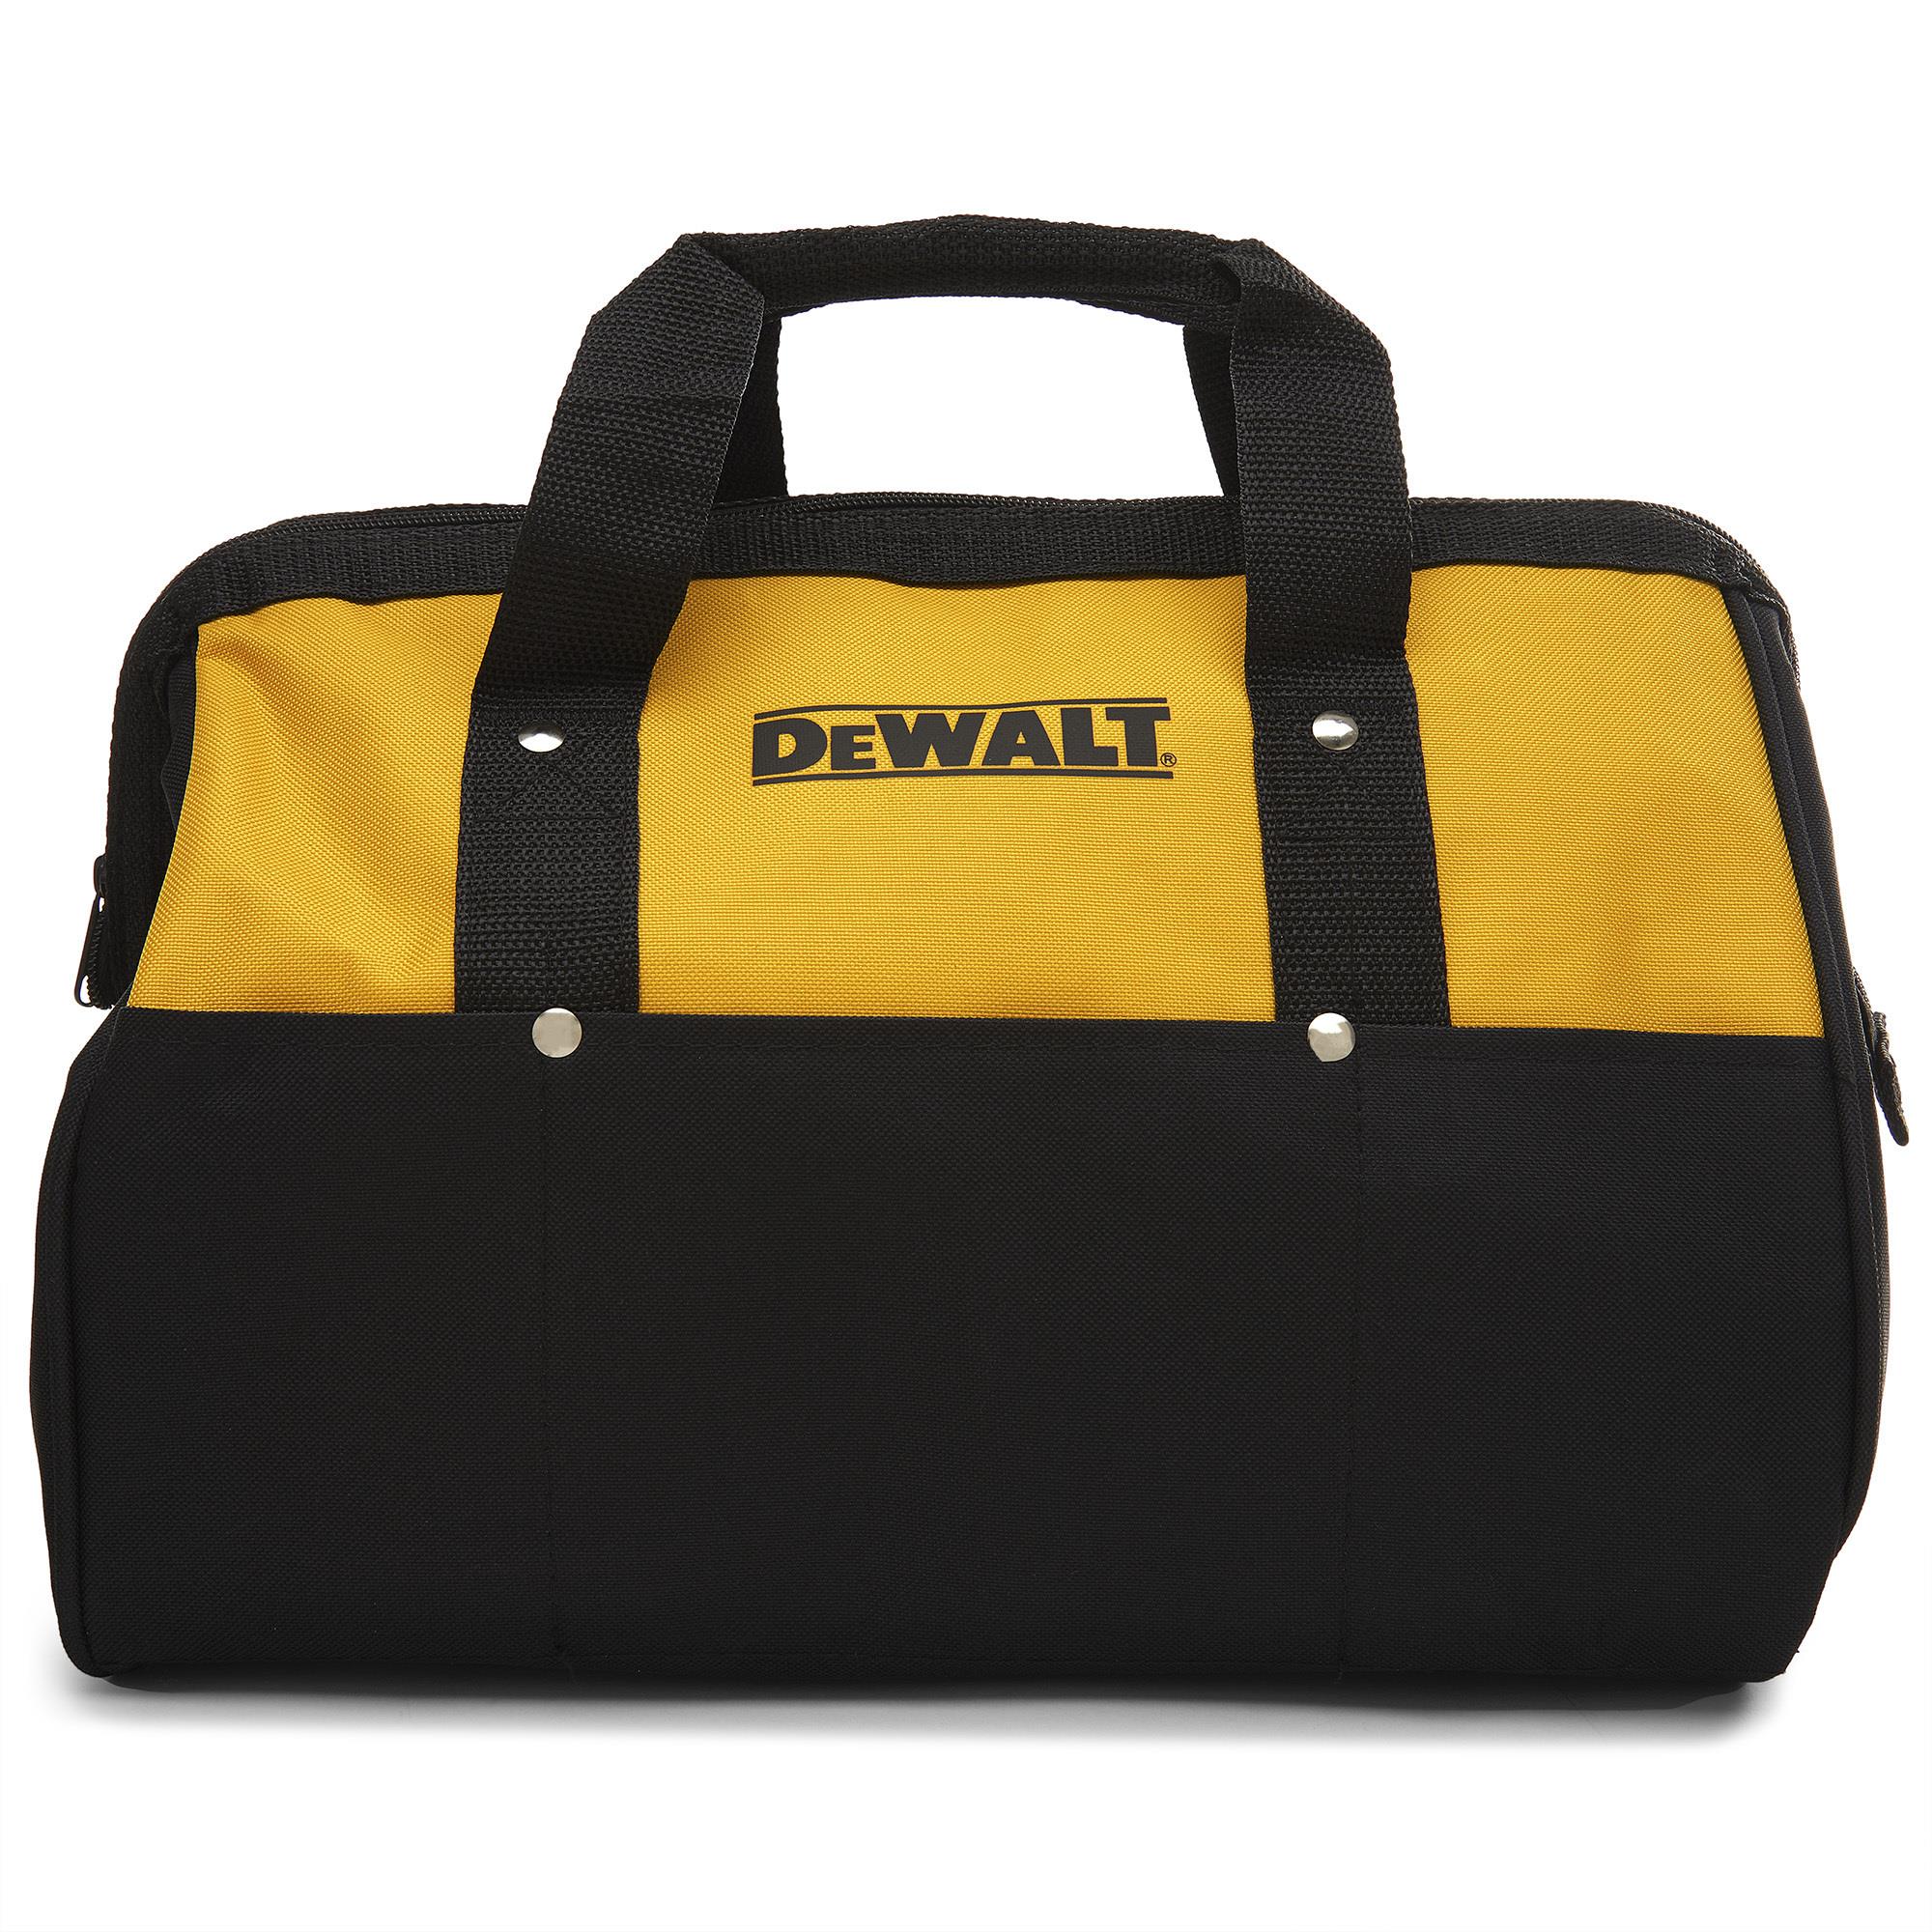 Dewalt-DCS565P1 20V MAX* 6-1/2 in. Brushless Cordless Circular Saw Kit 